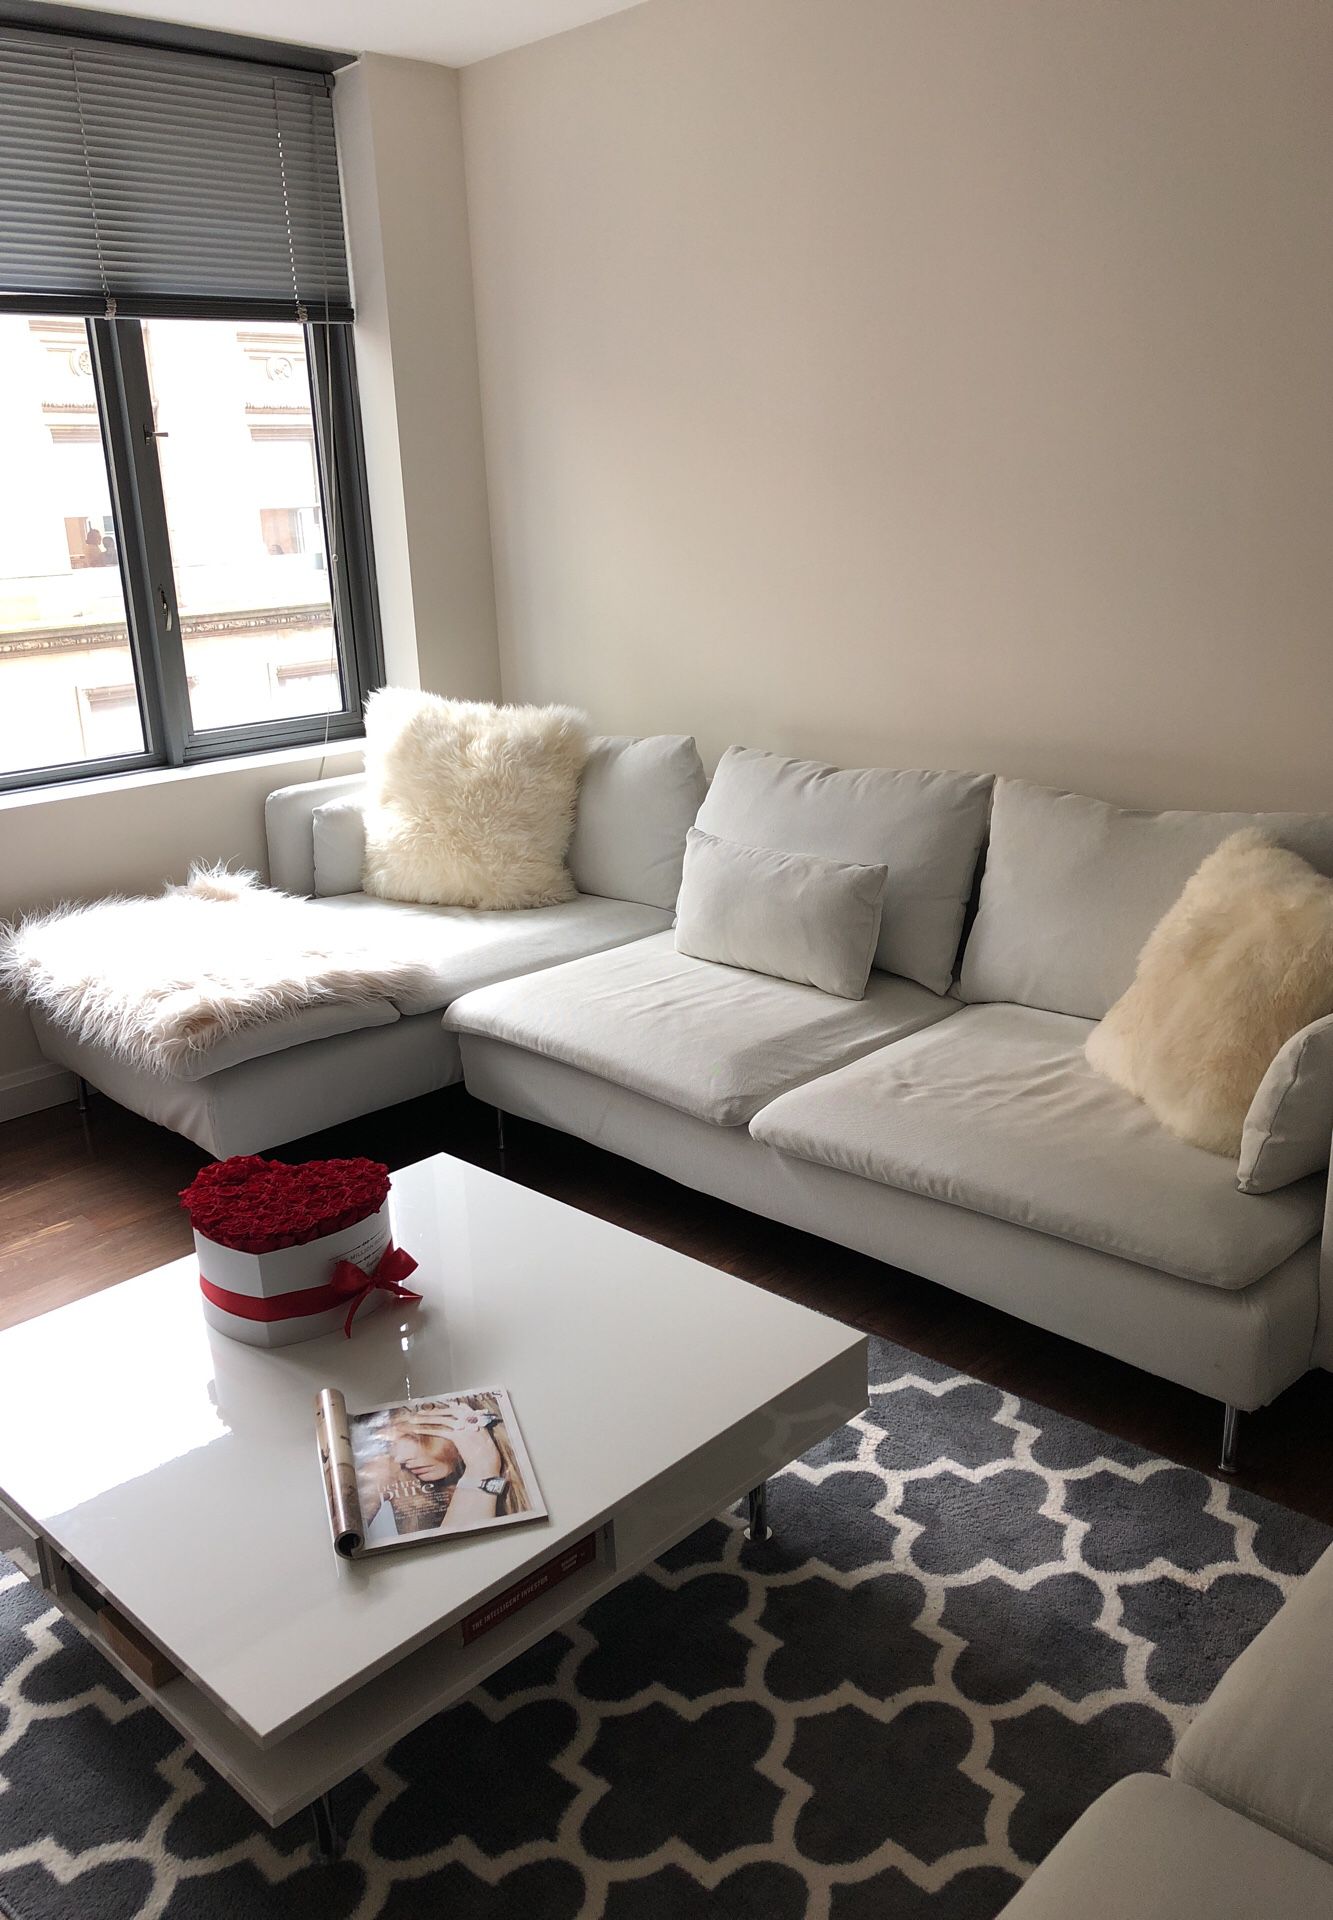 Sofa, table and pillows